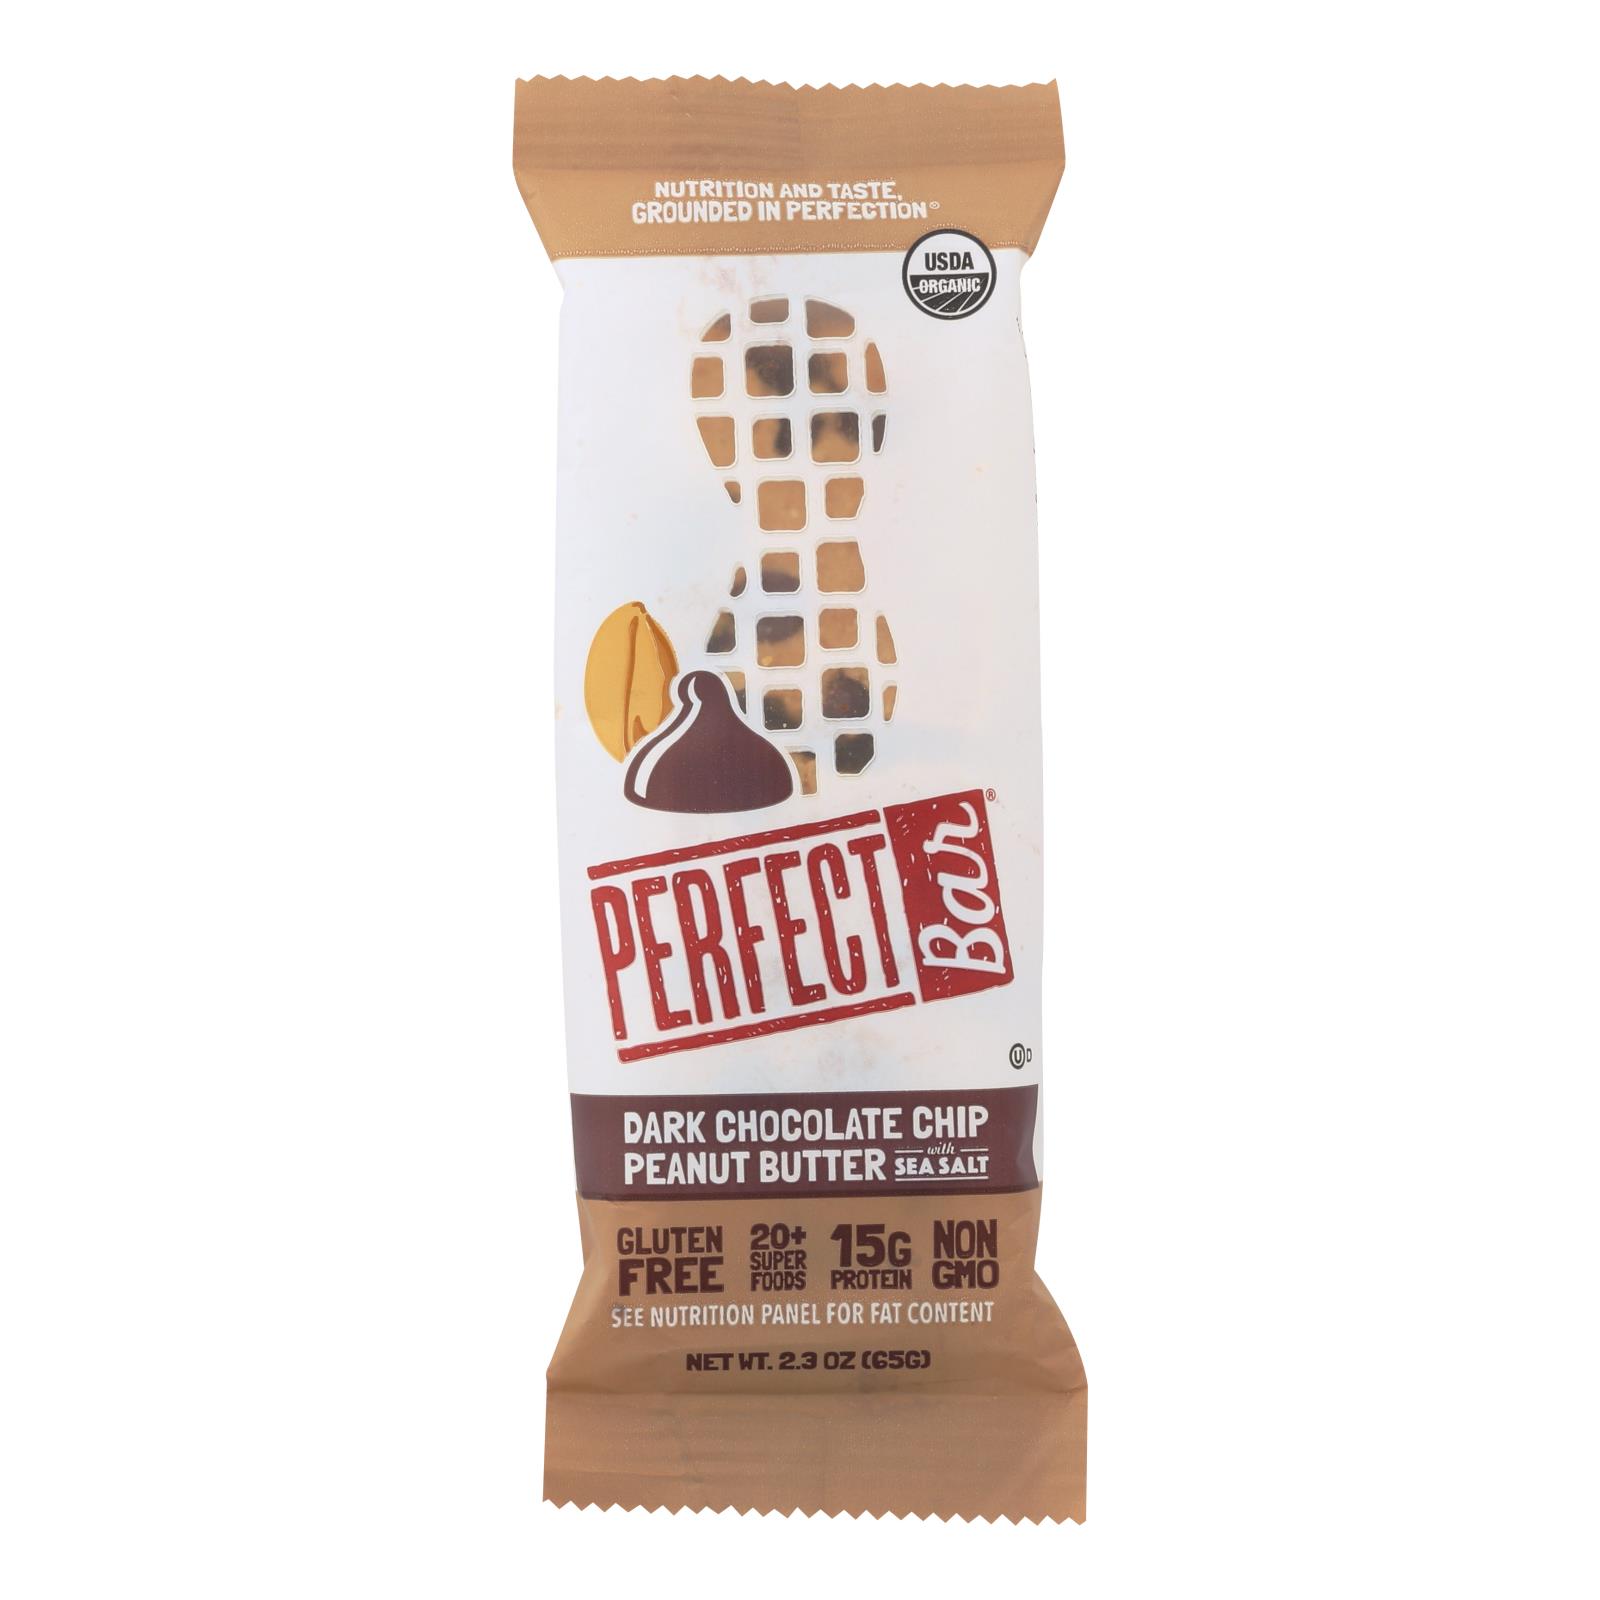 Perfect Bar Dark Chocolate Chip Peanut Butter Perfect Bar - 8개 묶음상품 - 2.3 OZ